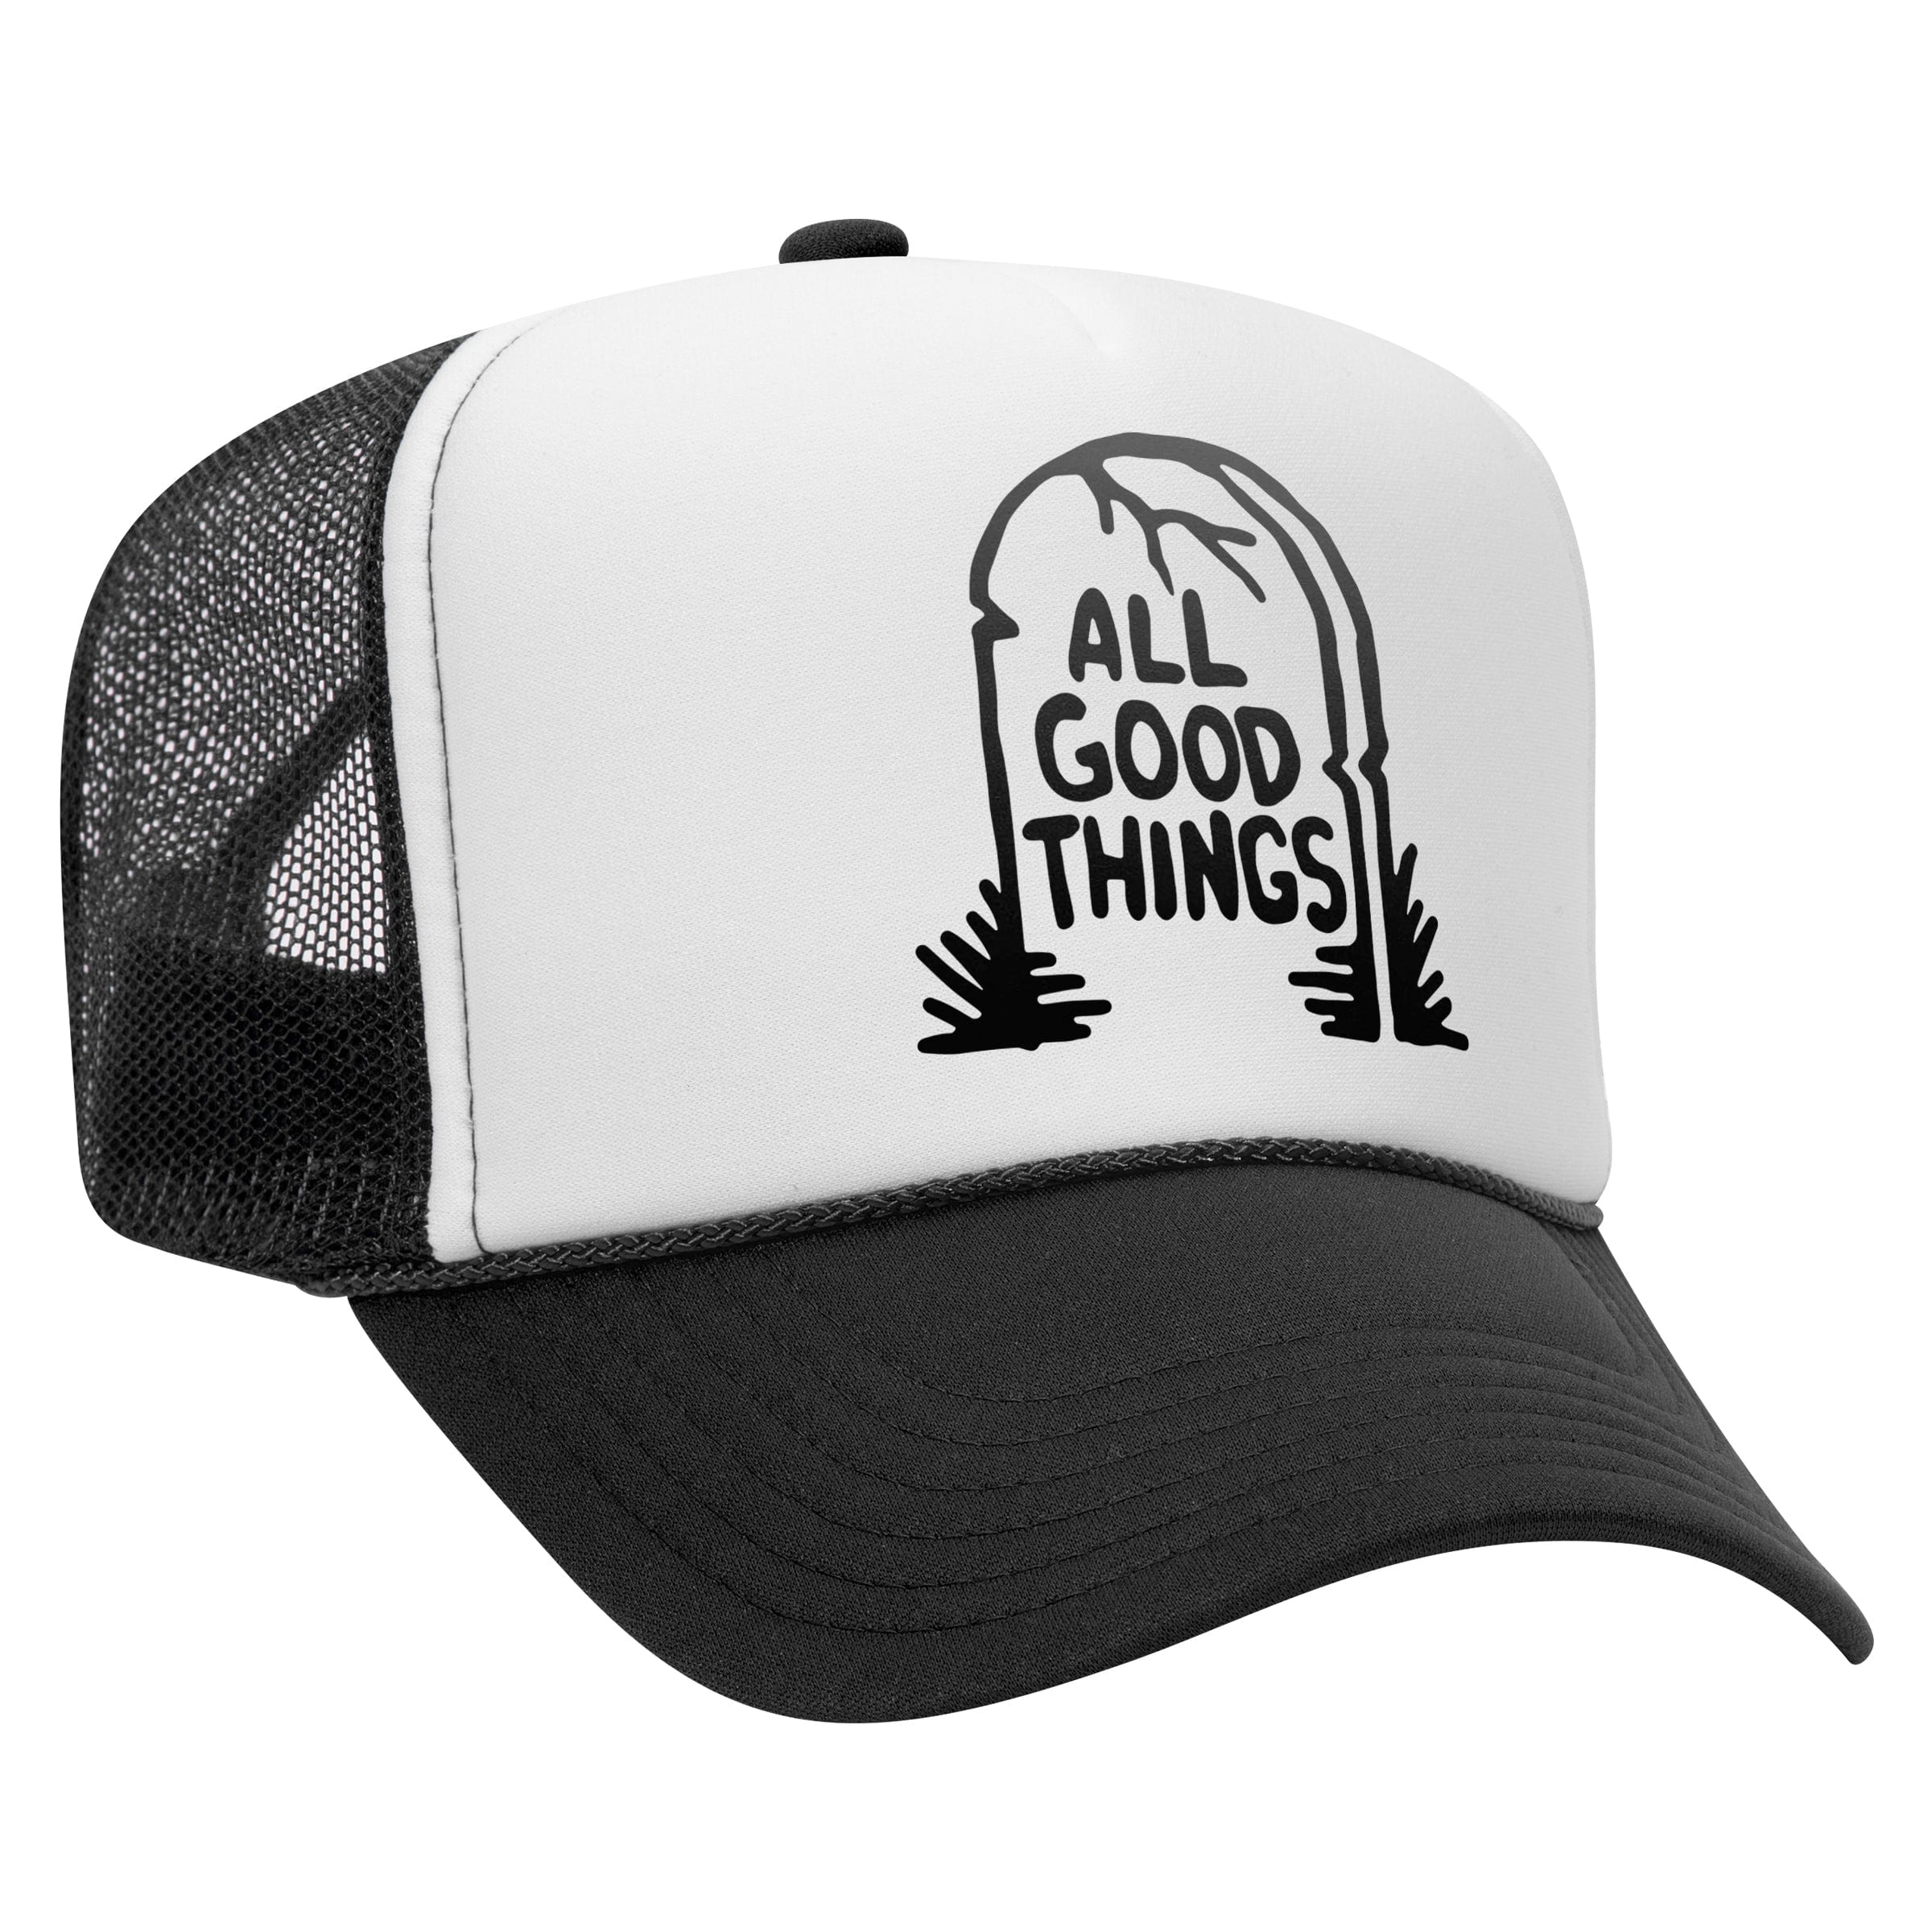 GOOD THINGS' TRUCKER HAT – PARANOID